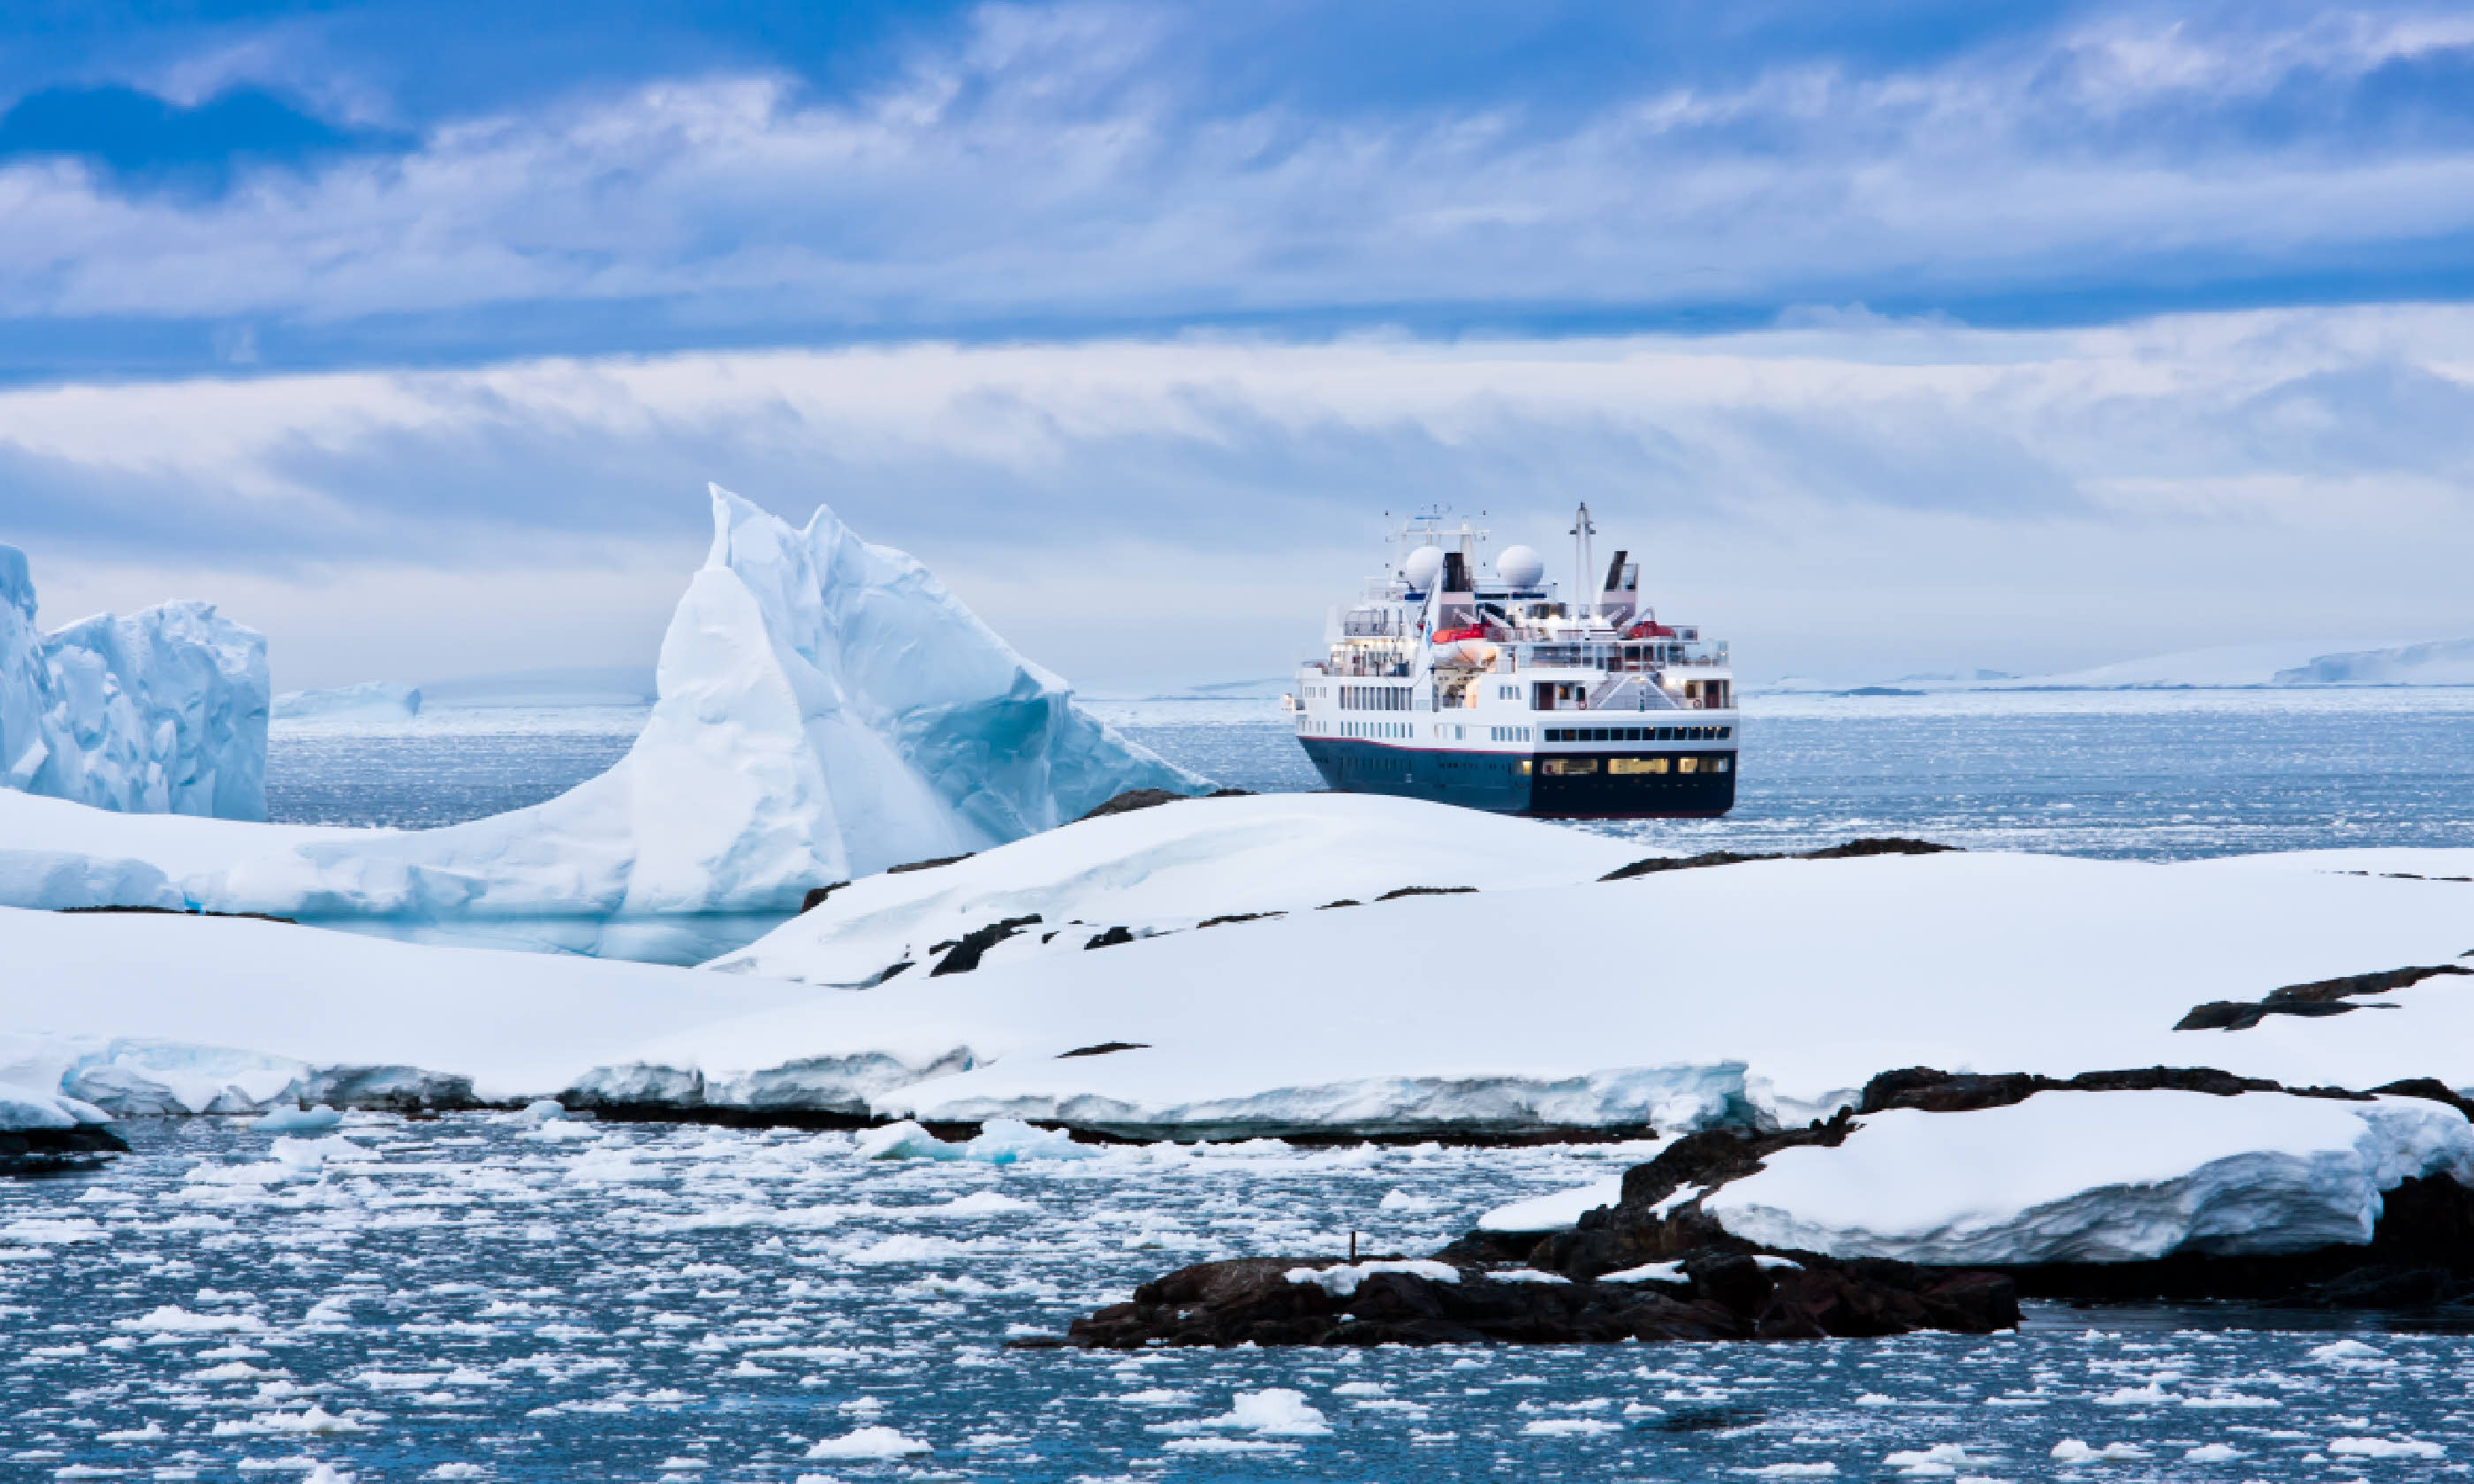 Cruise ship in Antarctic waters (Shutterstock: see credit below)